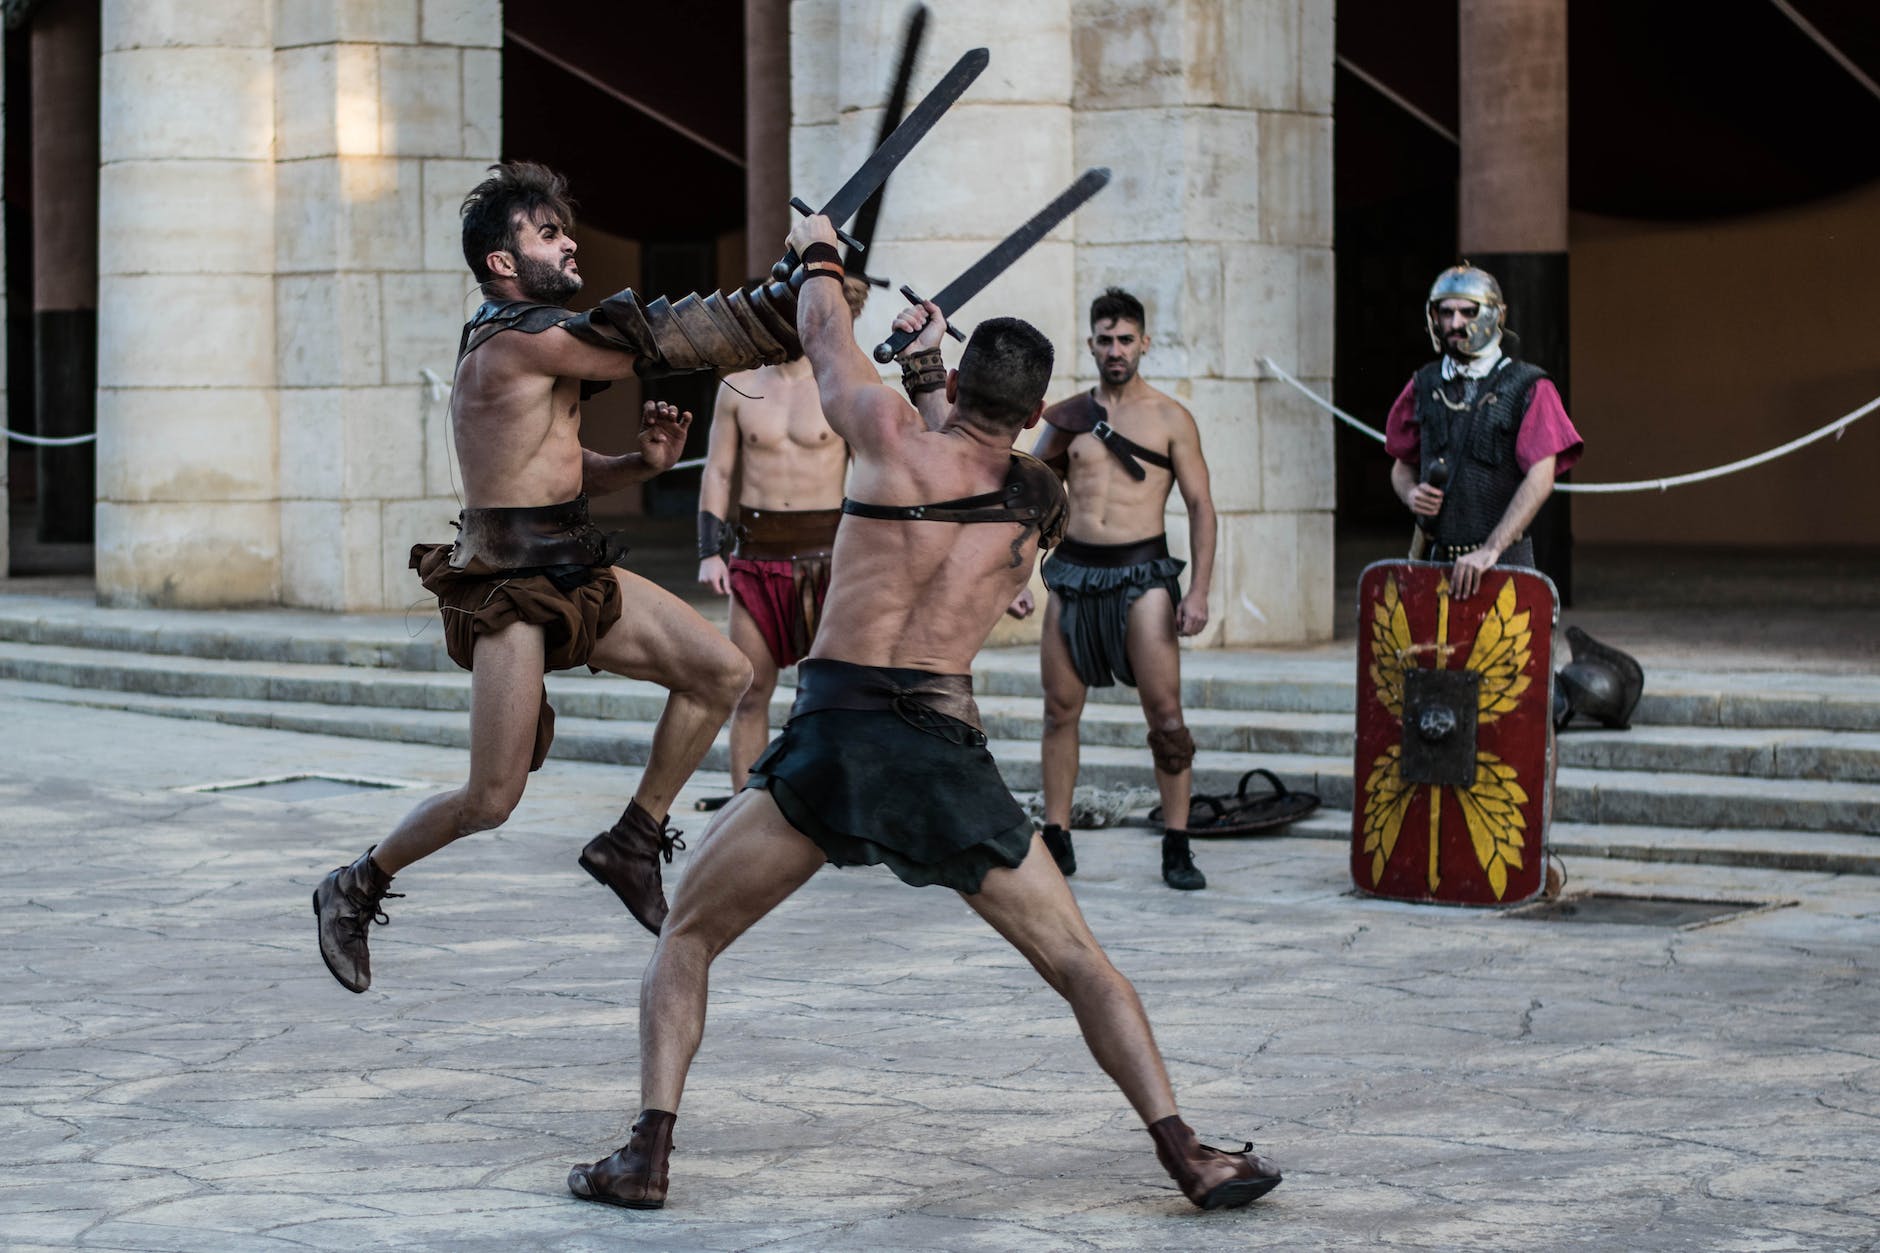 shirtless men fighting with sword